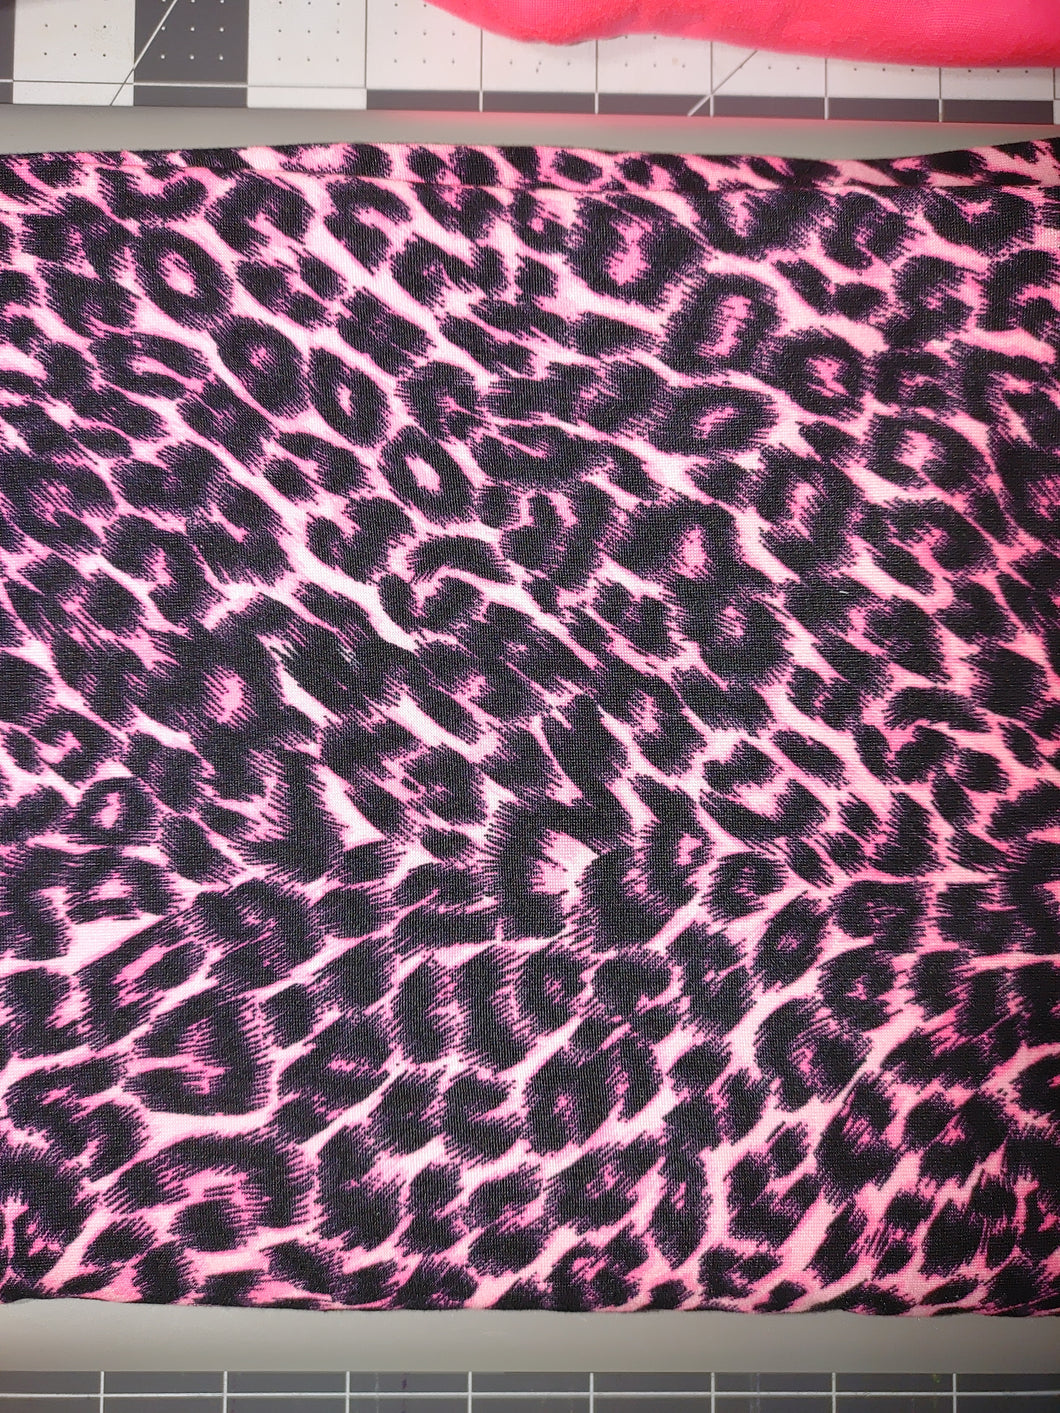 Neon pink leopard